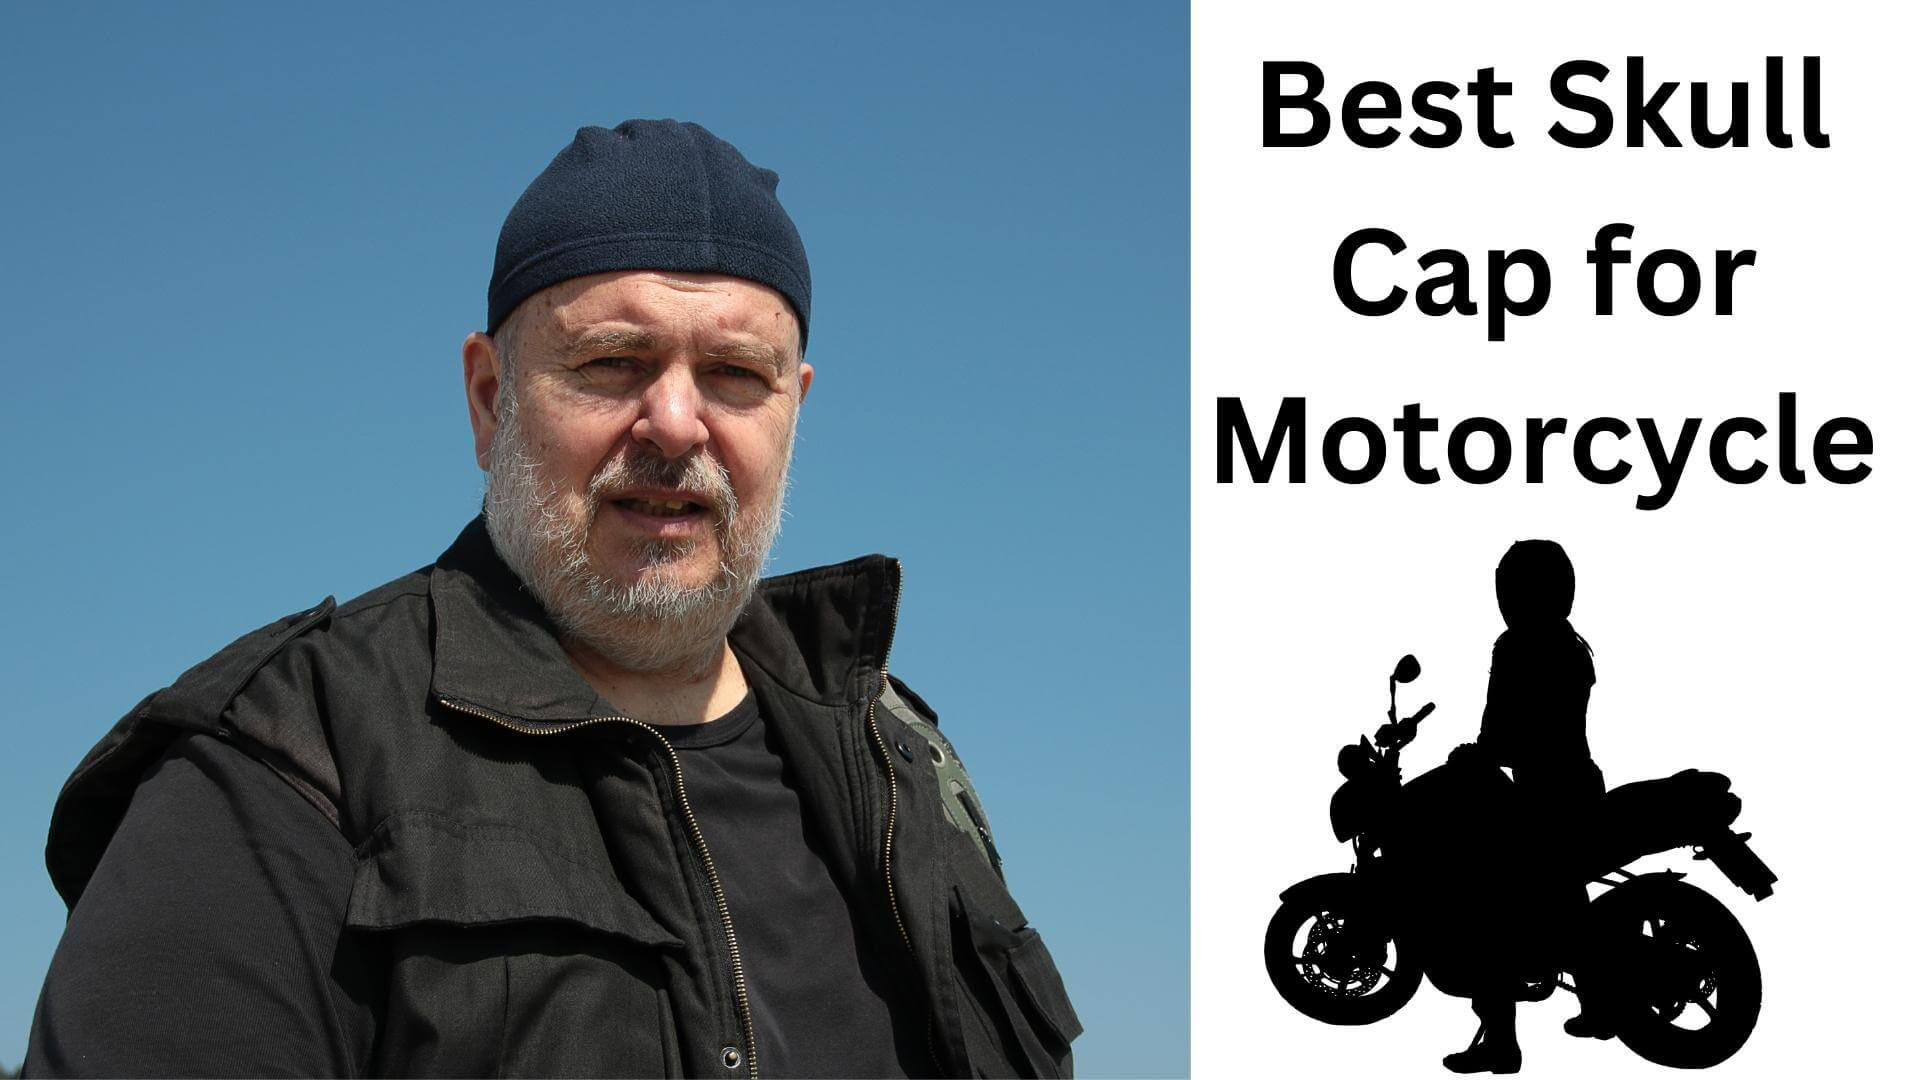 Best Skull Cap for Motorcycle